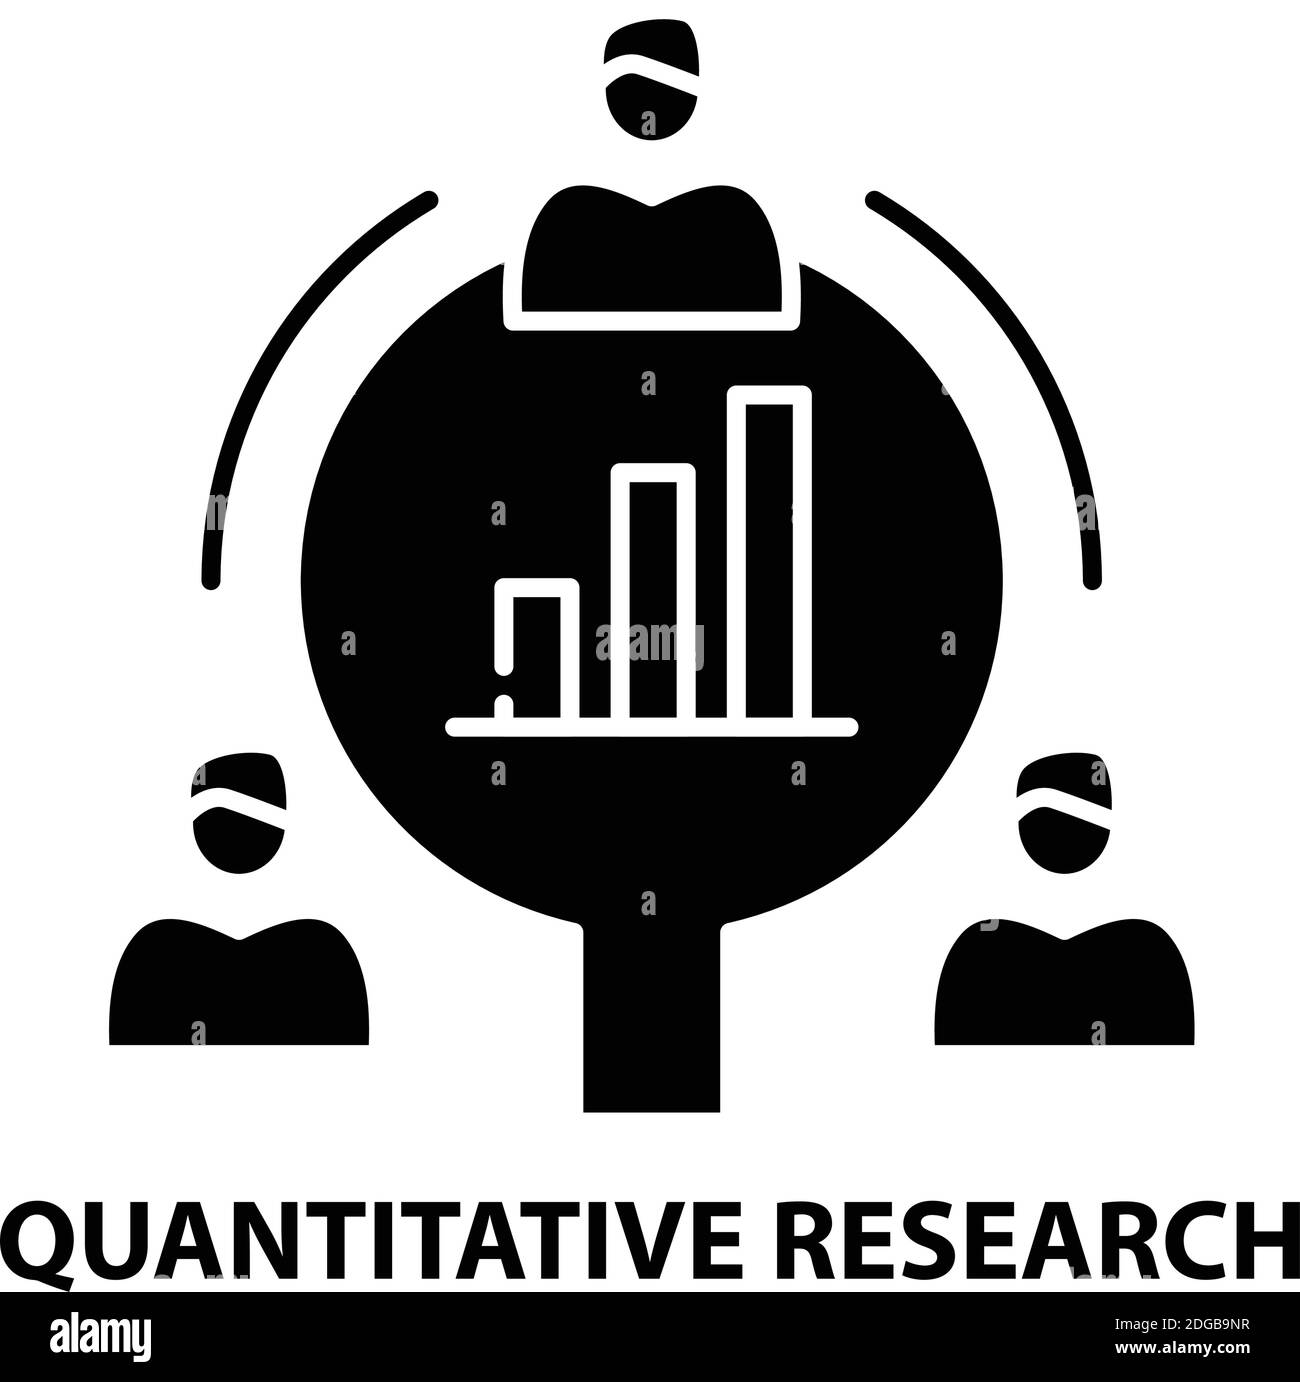 quantitative techniques logo